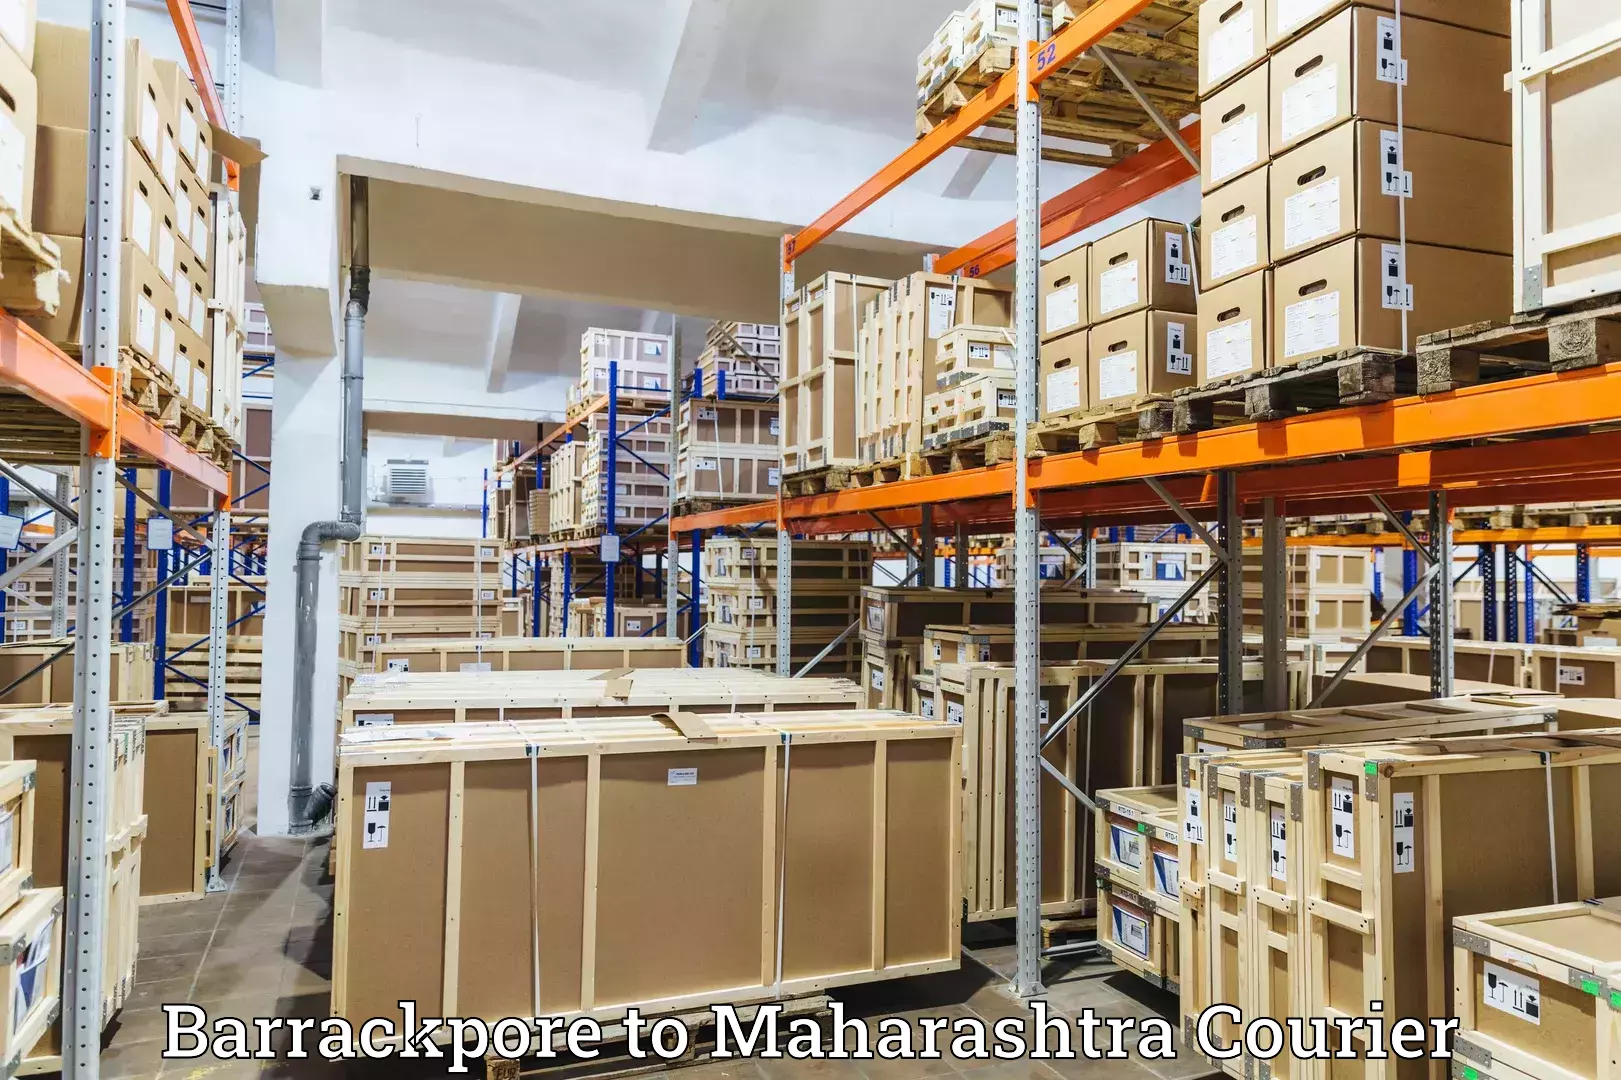 Courier service comparison Barrackpore to Maharashtra